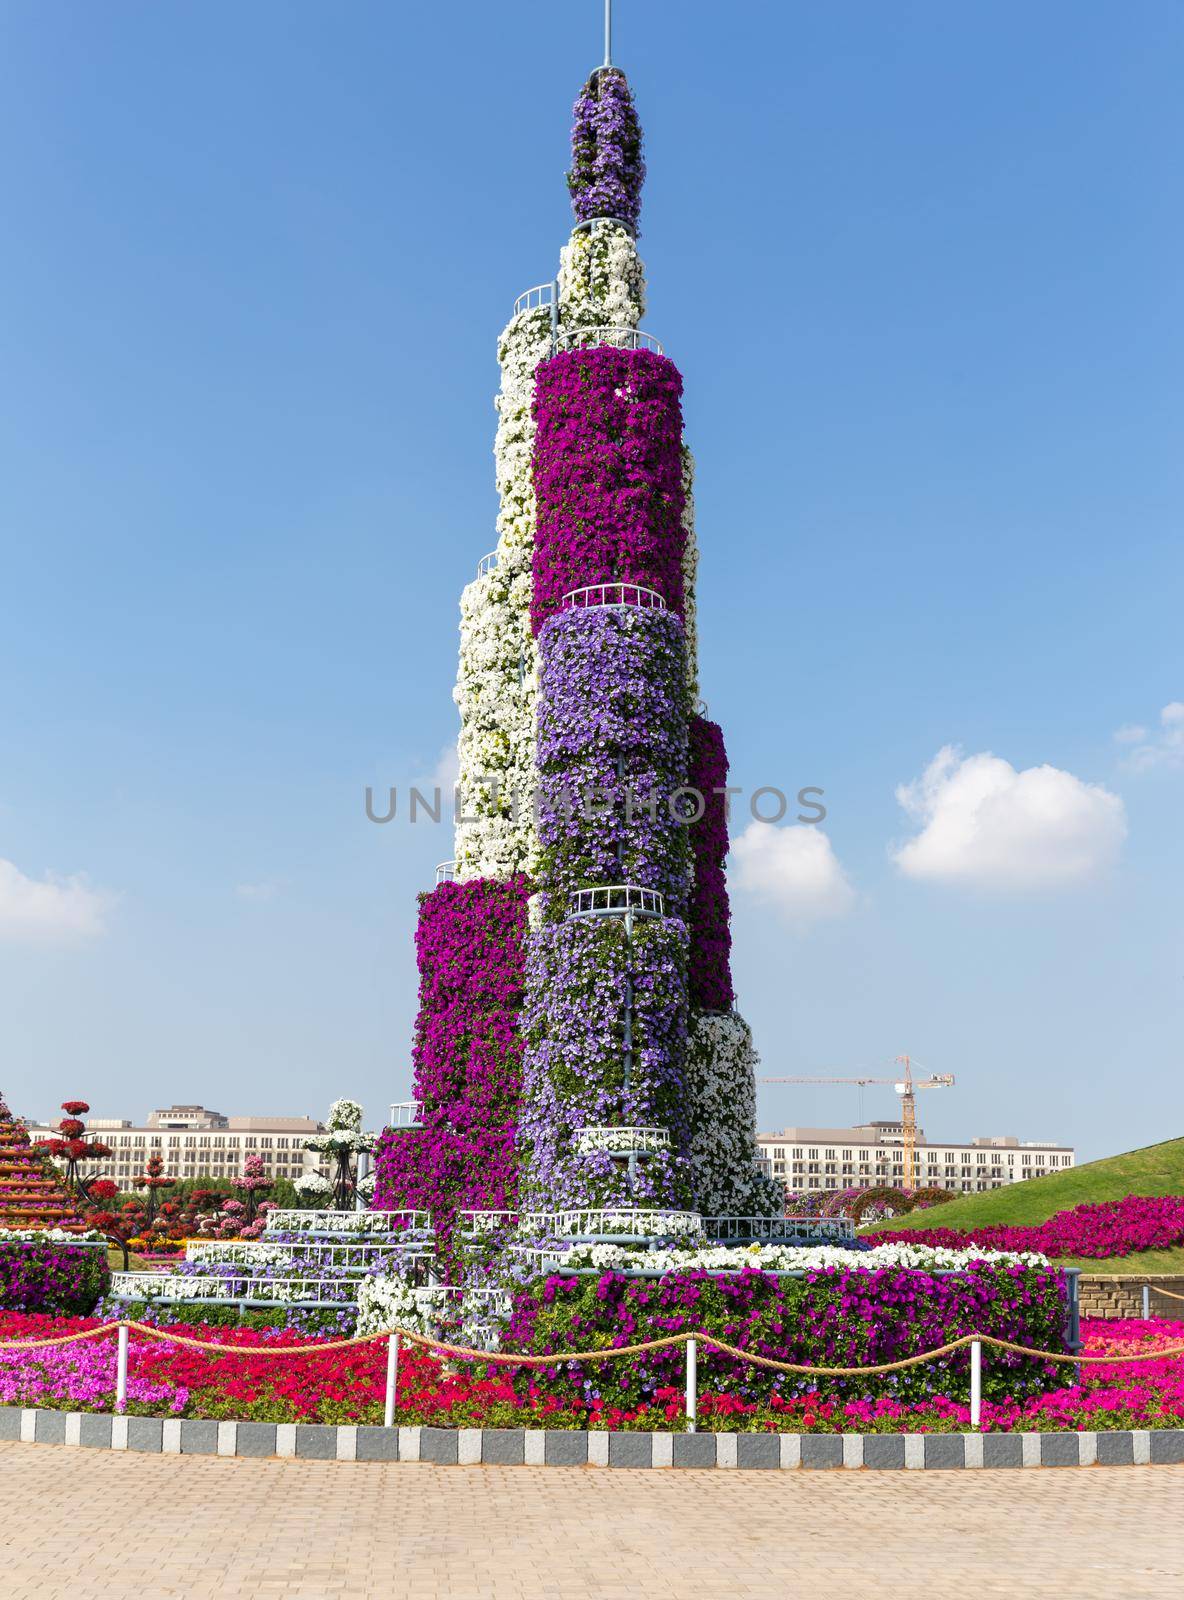 DUBAI, UAE - JANUARY 20: Miracle Garden in Dubai, on January 20, 2014, Dubai, UAE. Beautiful Miracle Garden with 45 million flowers